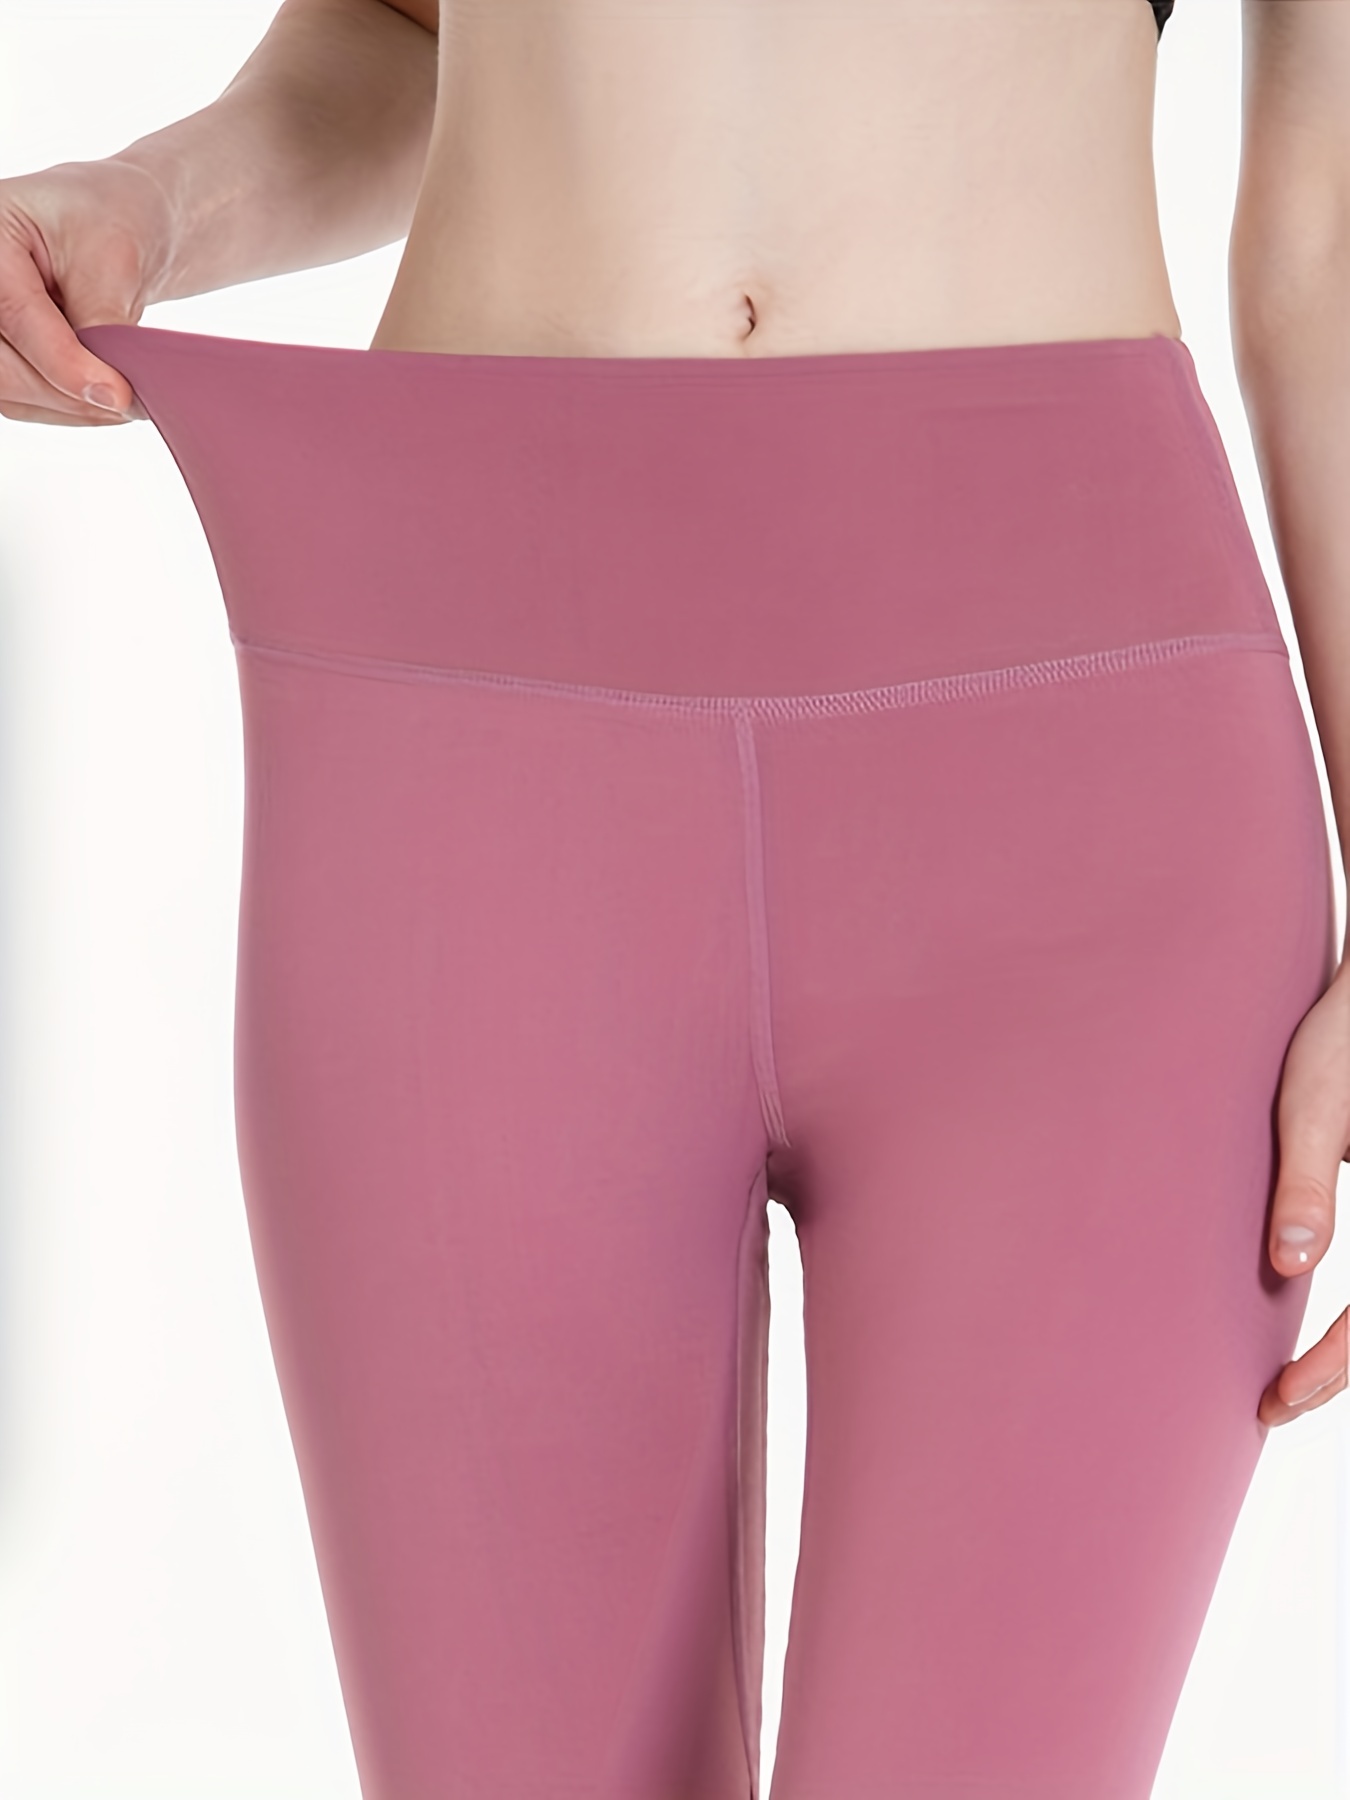 Mrat High Waisted Athletic Pants Capris Yoga Pants Women's Knee